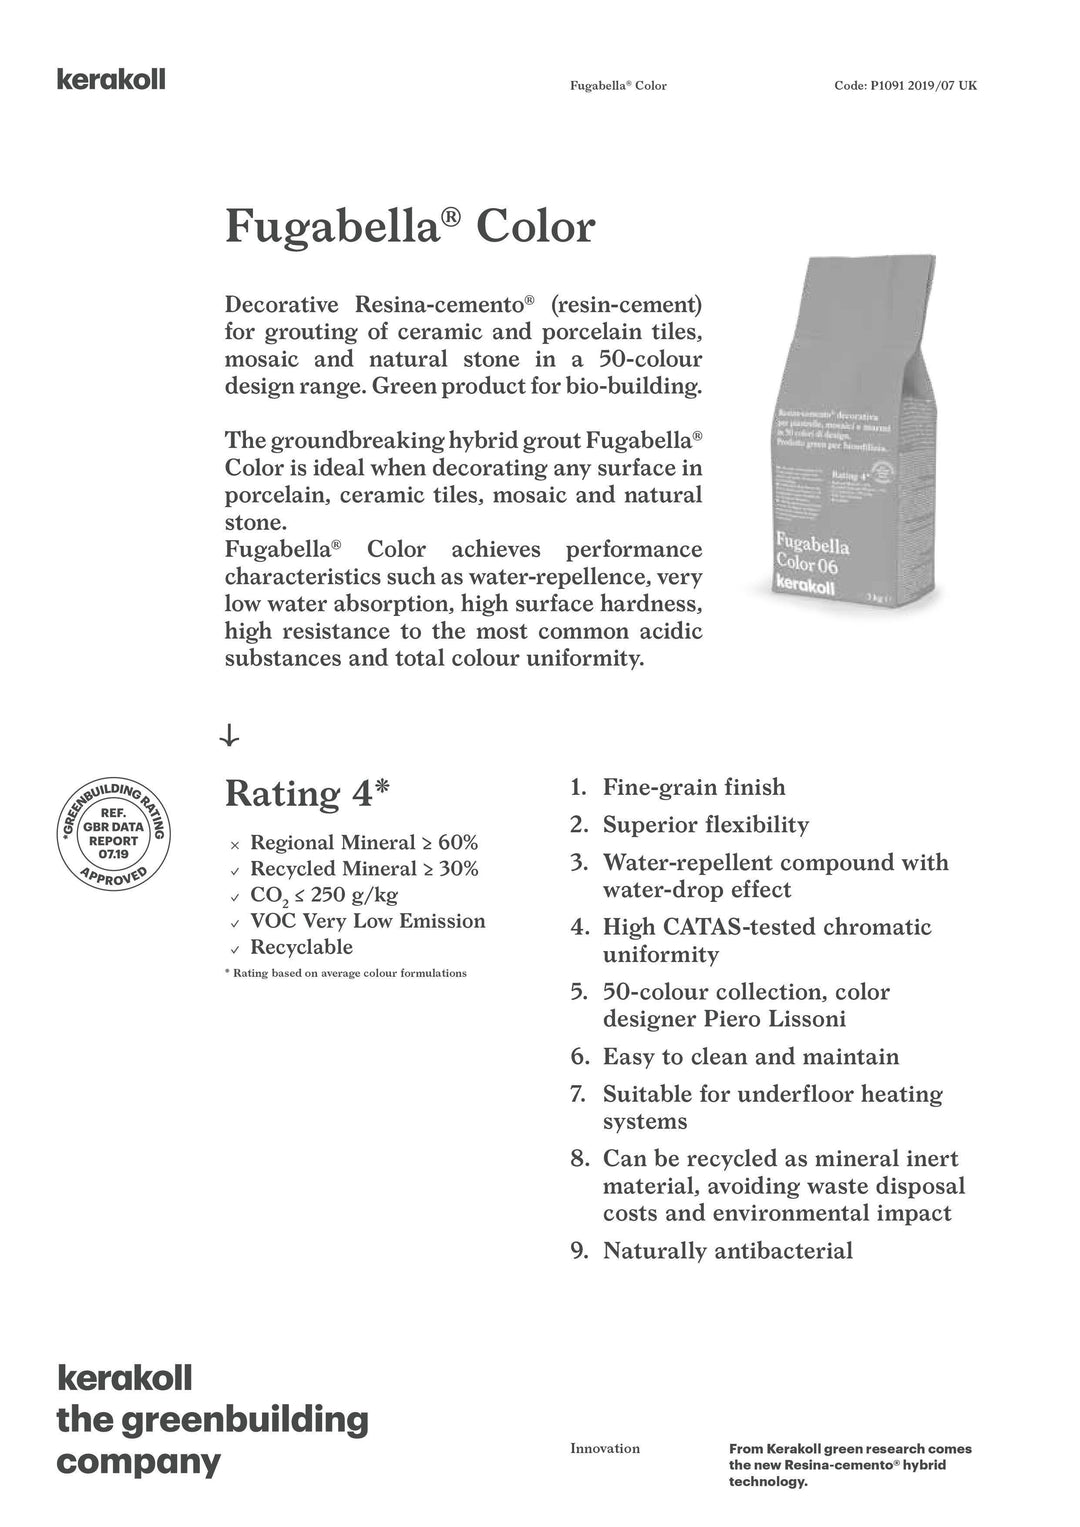 Kerakoll Fugabella Color Grout 24 Parchment 3Kg